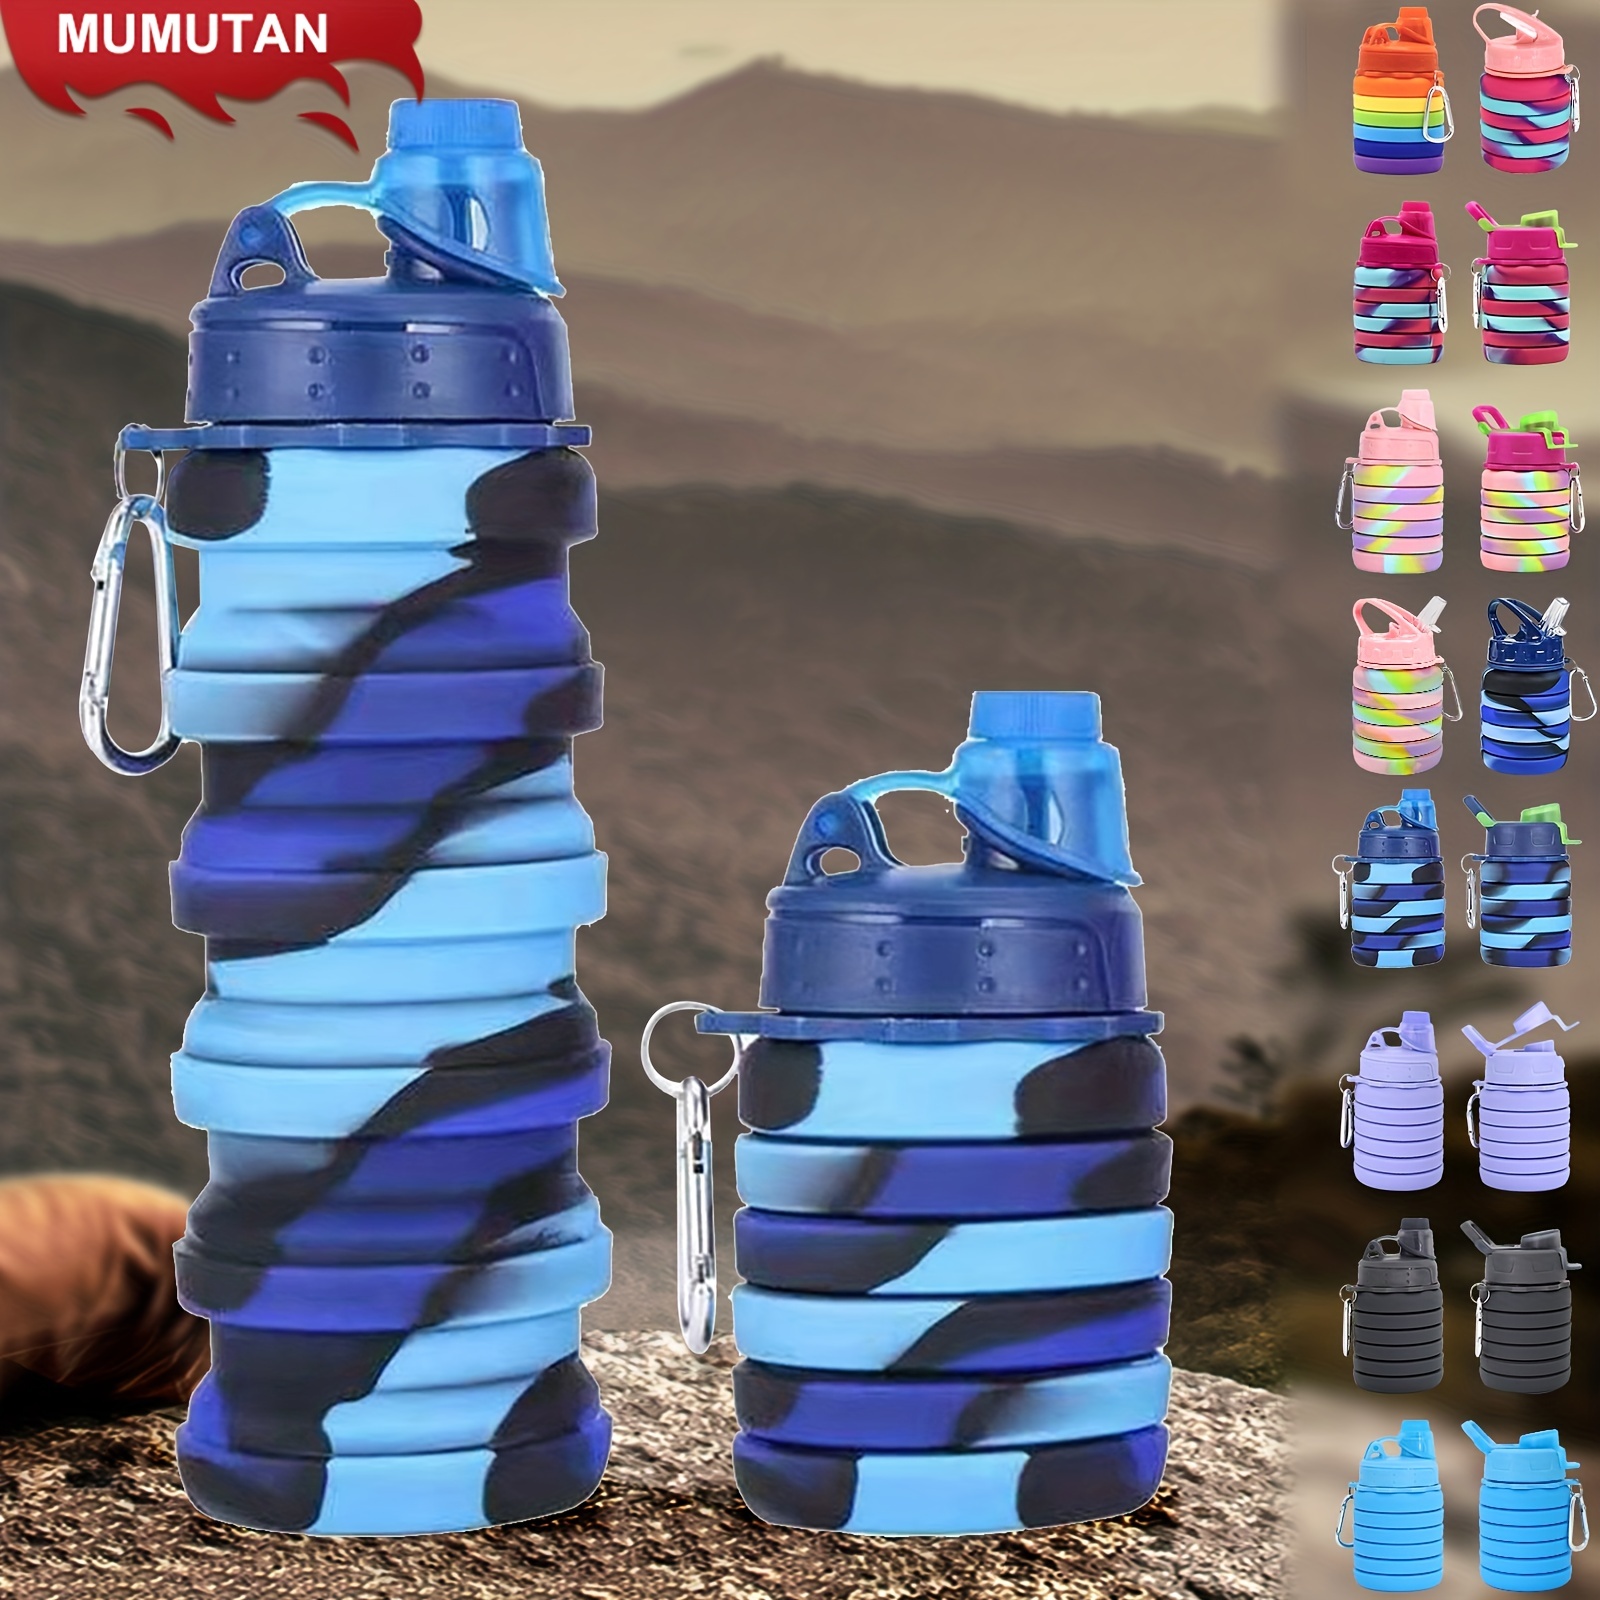 Mumutan Silicone Collapsible Water Bottles, Portable Foldable